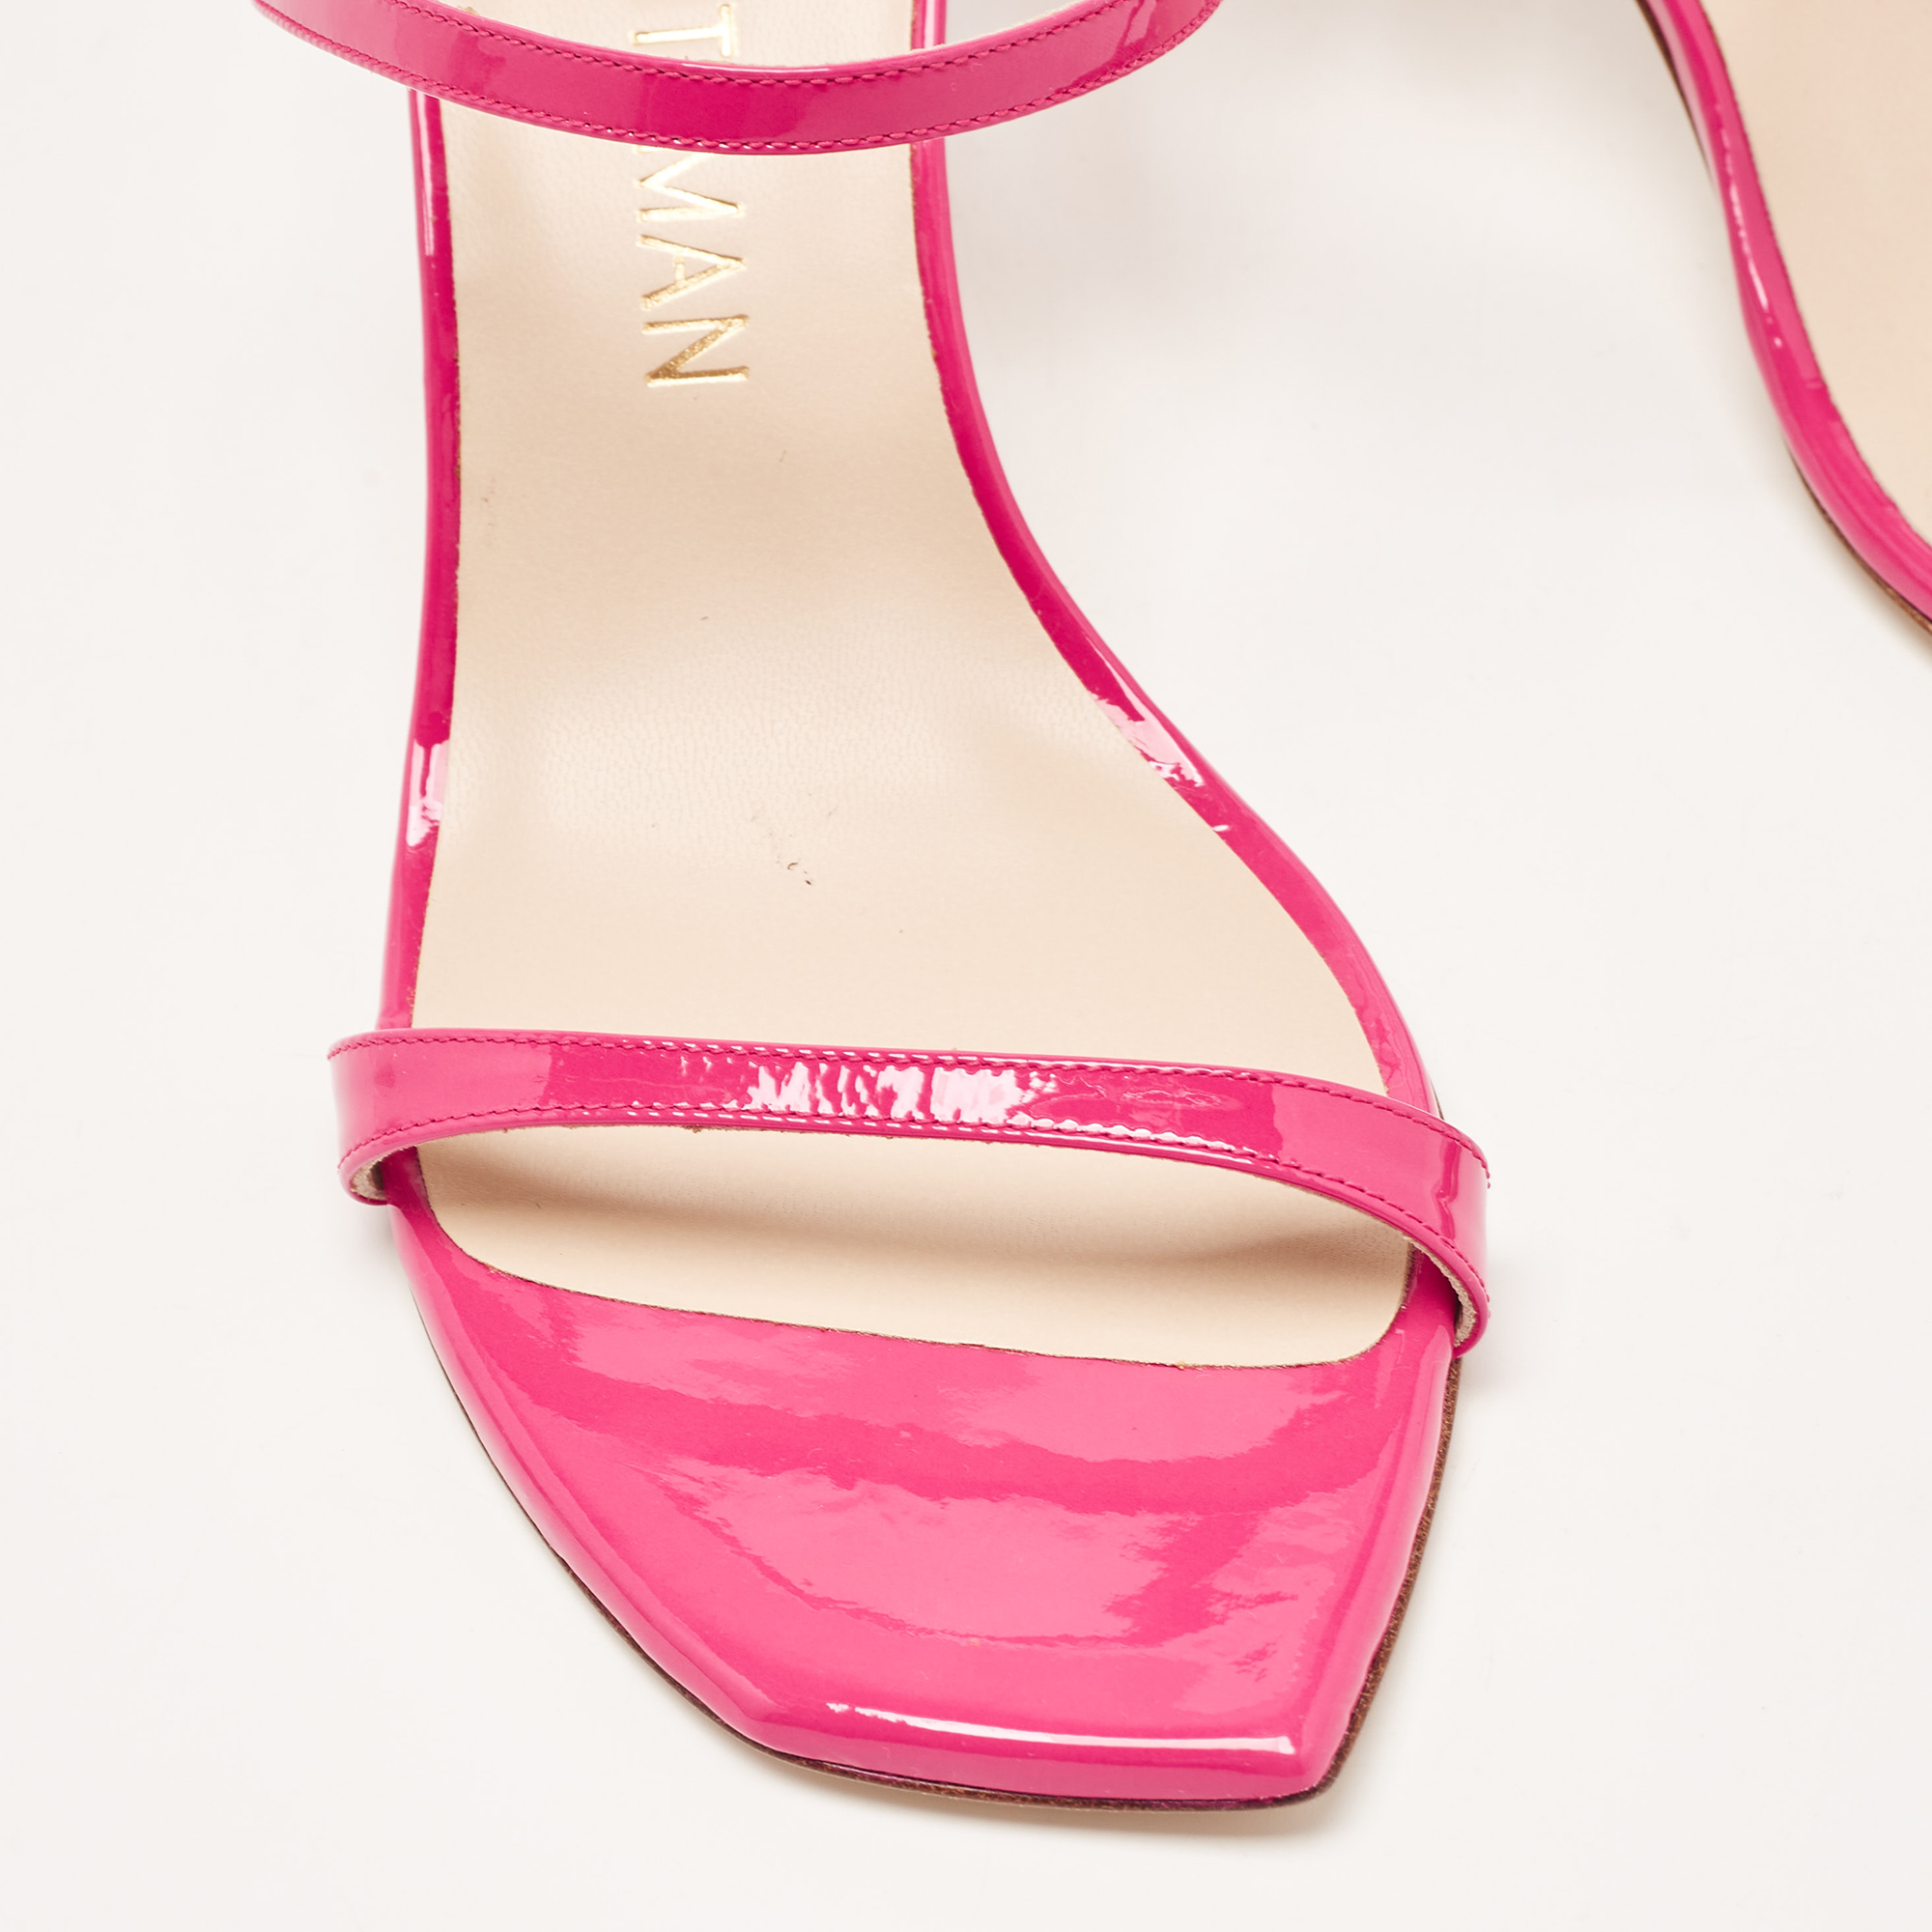 Stuart Weitzman Pink Patent Leather Slide Sandals Size 41